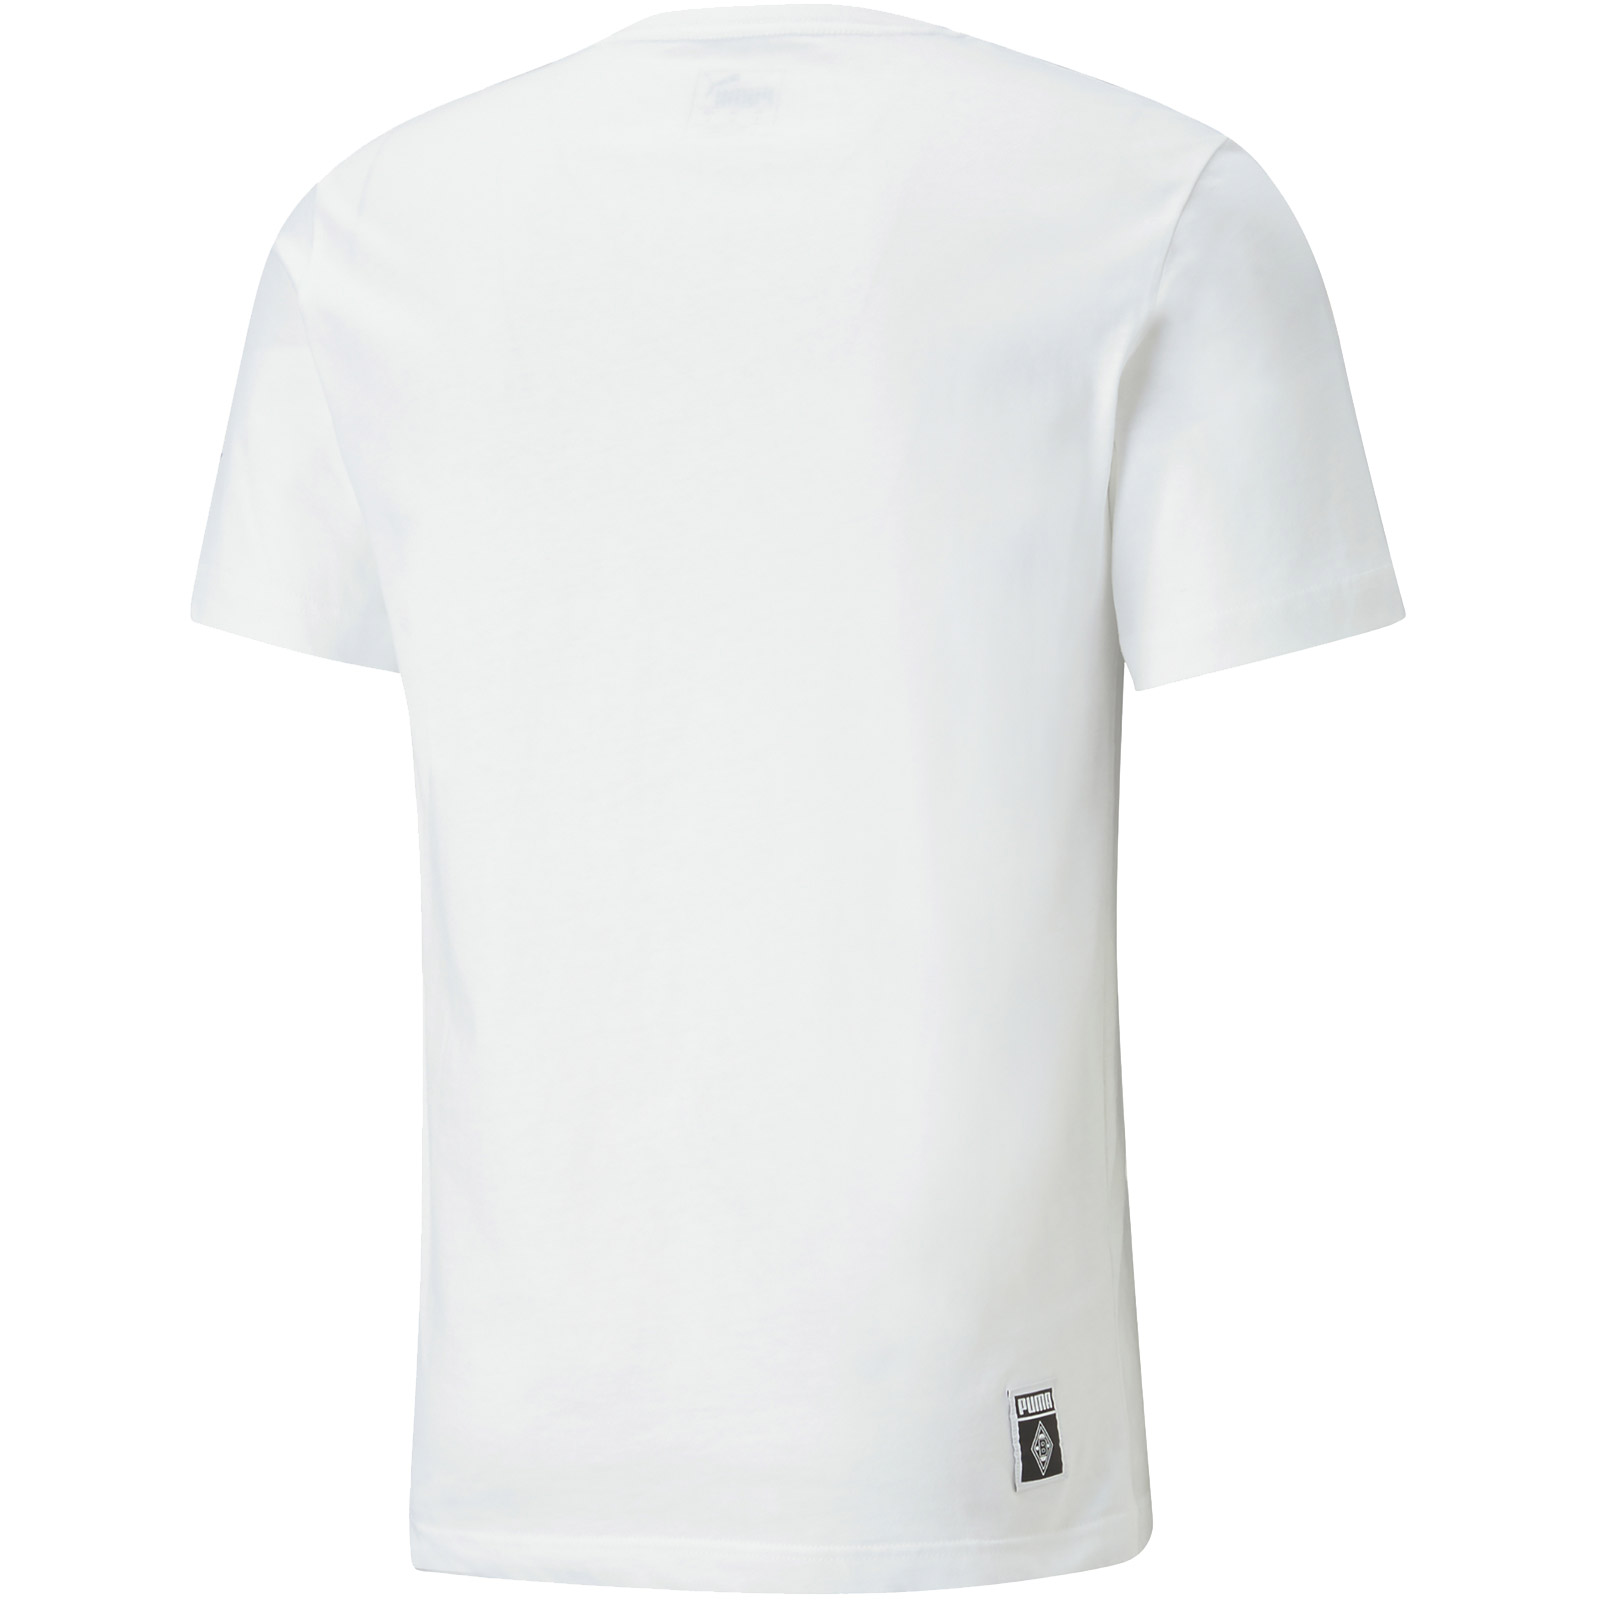 Borussia Moenchengladbach Puma T-Shirt "ftlbCore" - white